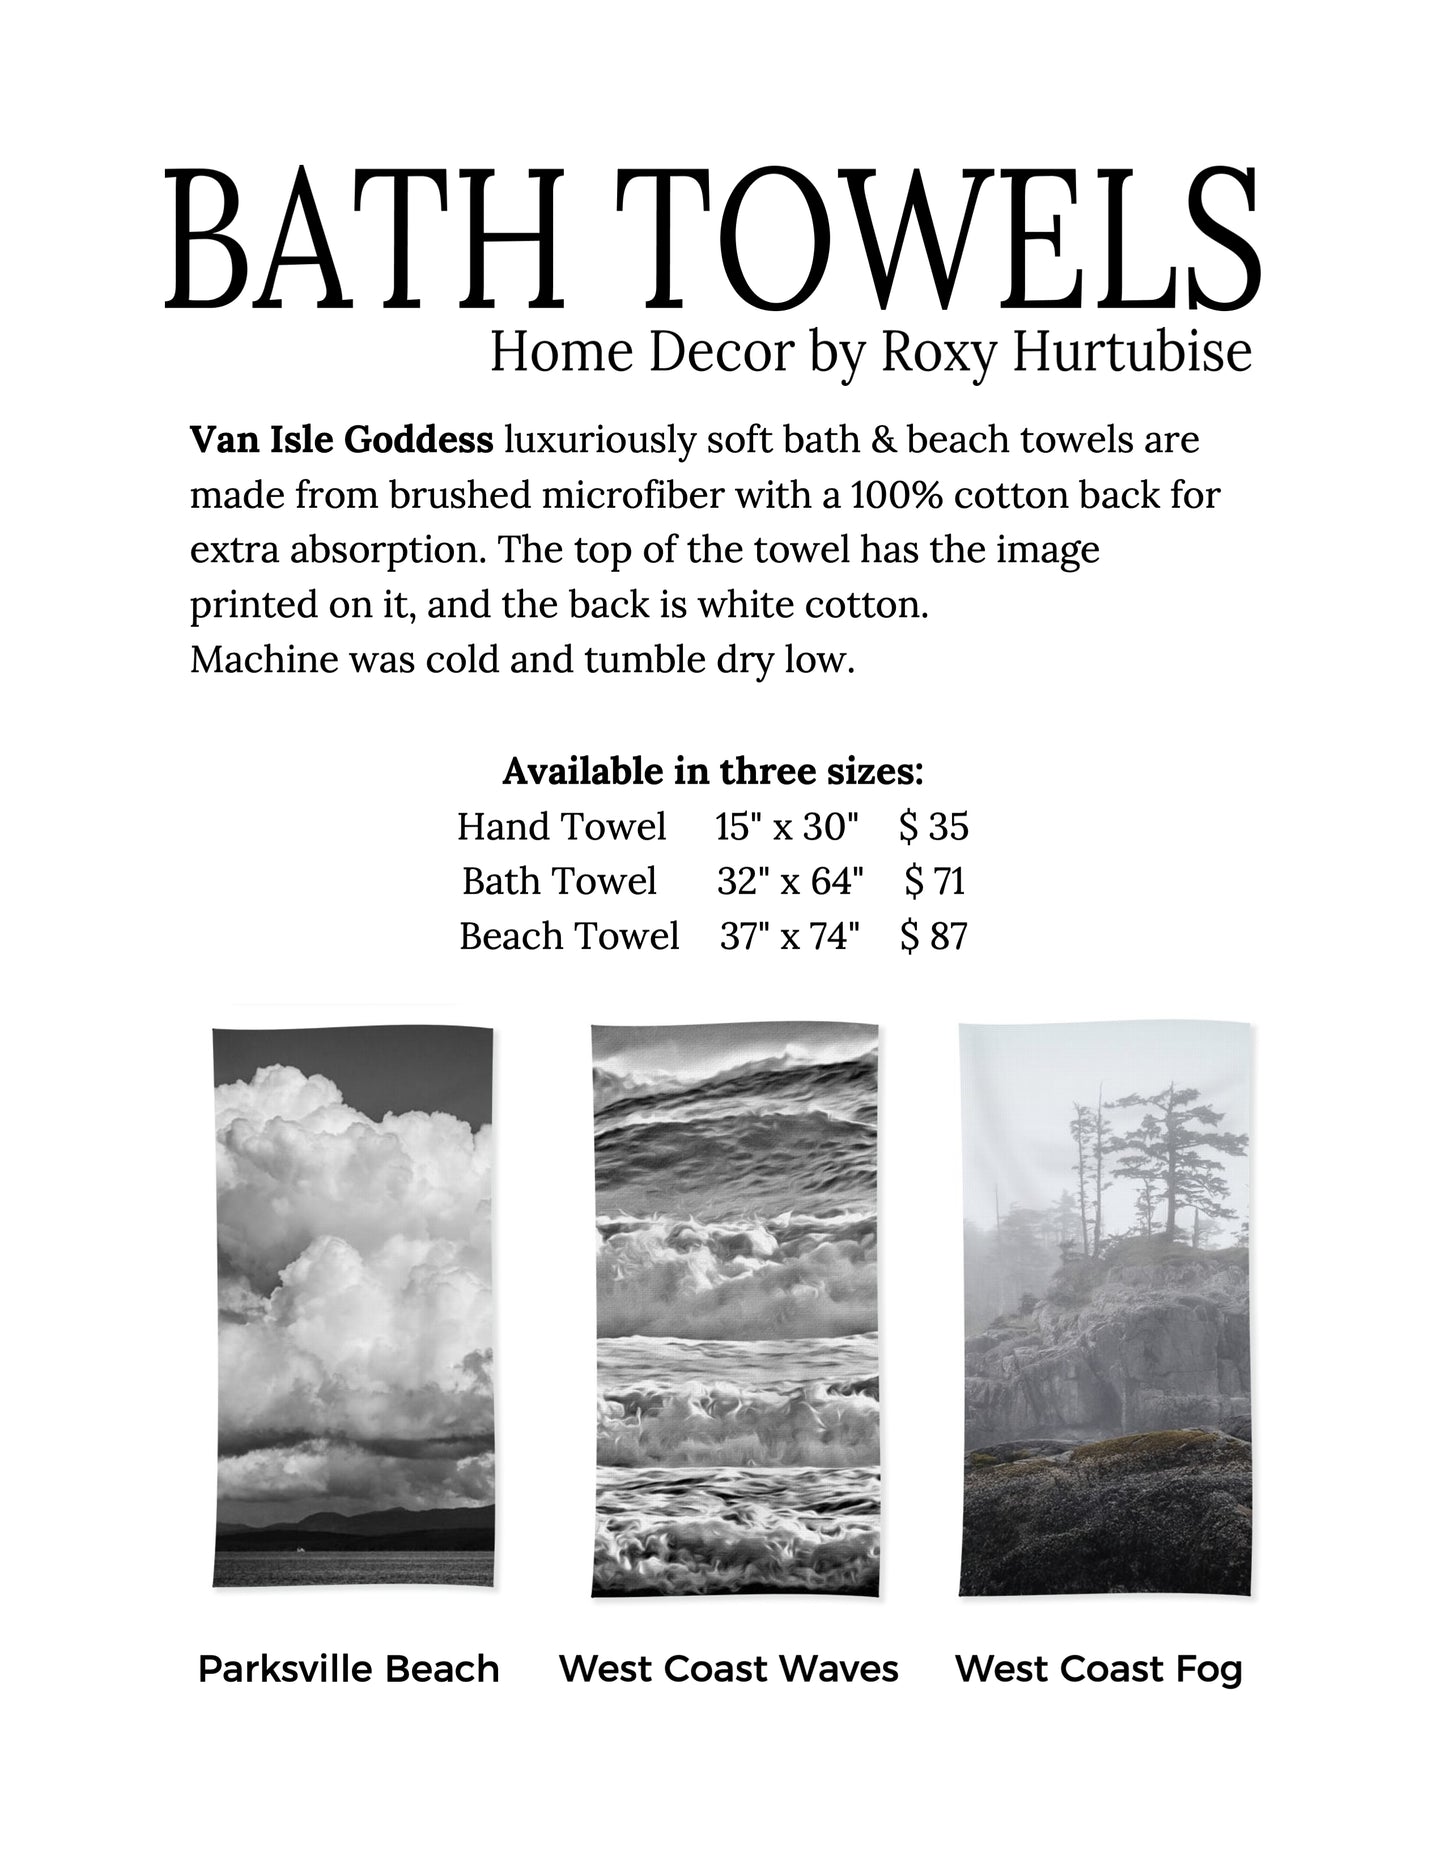 Island Goddess Bath & Beach Towels